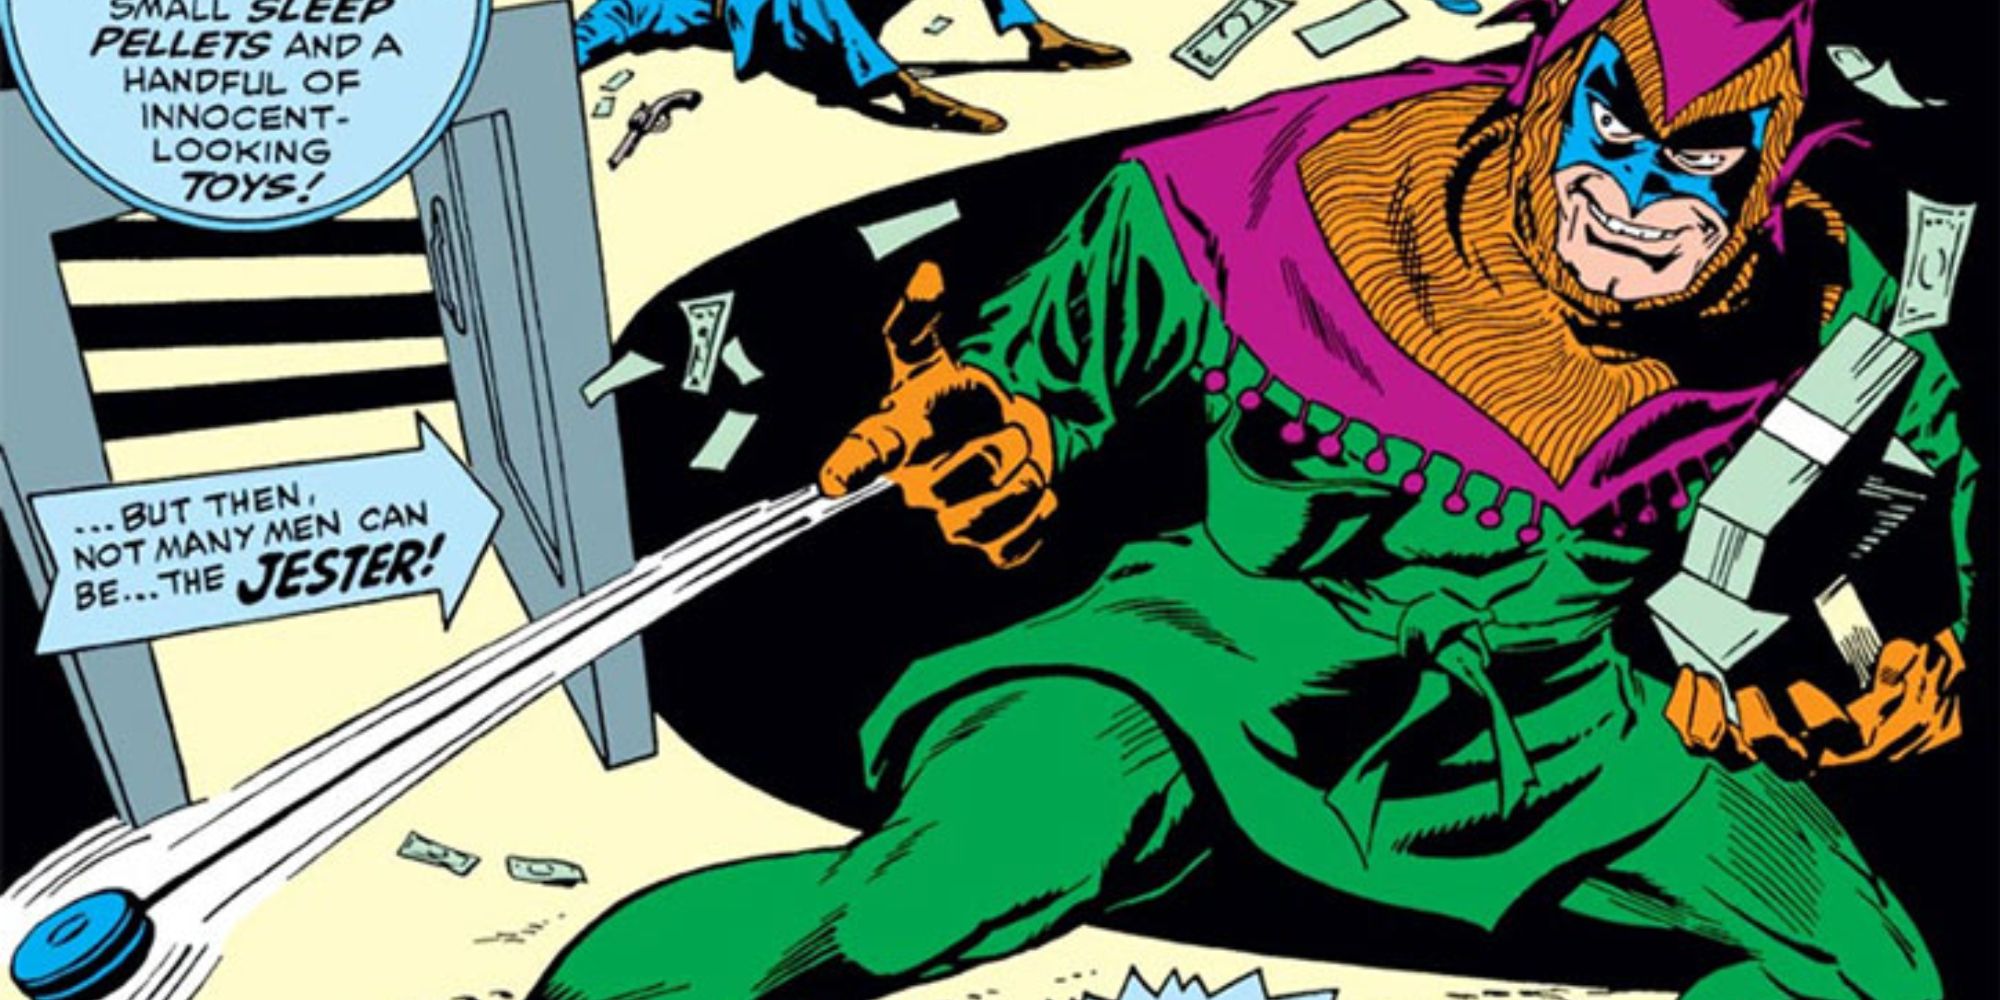 The Jester attacks in Marvel Comics.